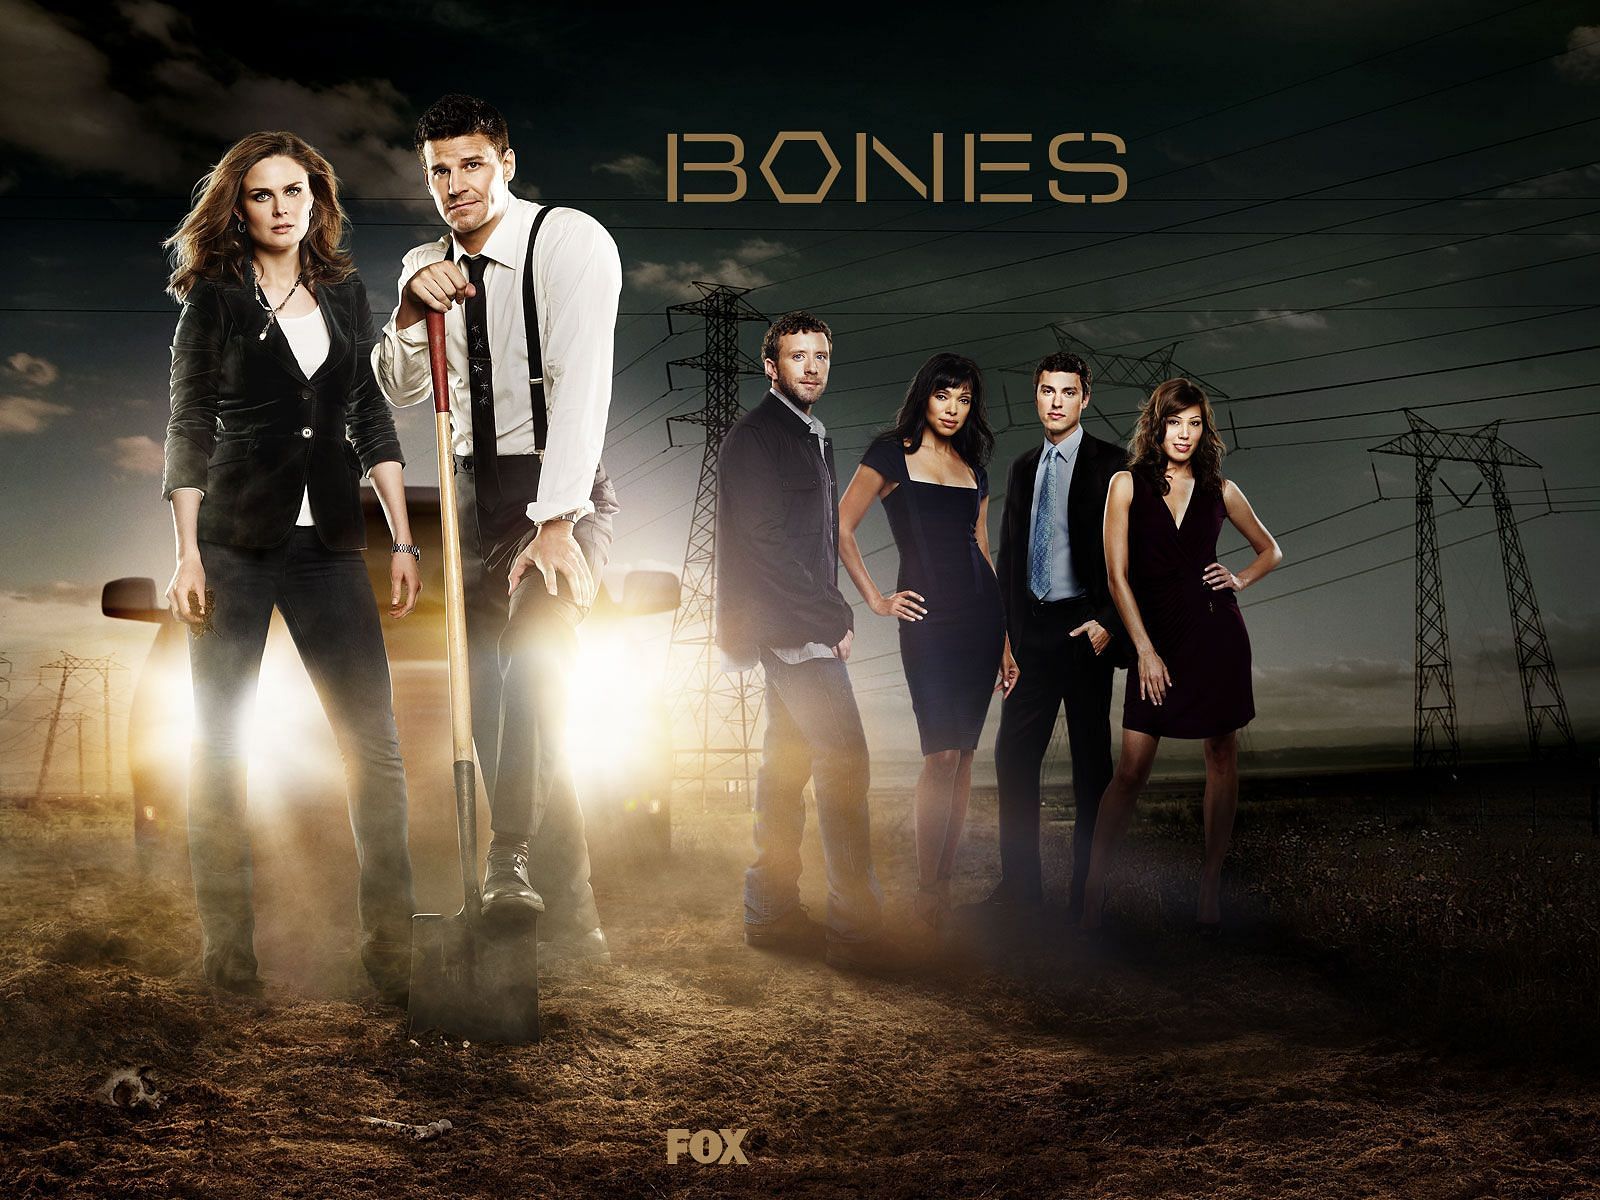 Dr. Temperance Bones gained fat in the final season (Image via Facebook/Bones TV Show)